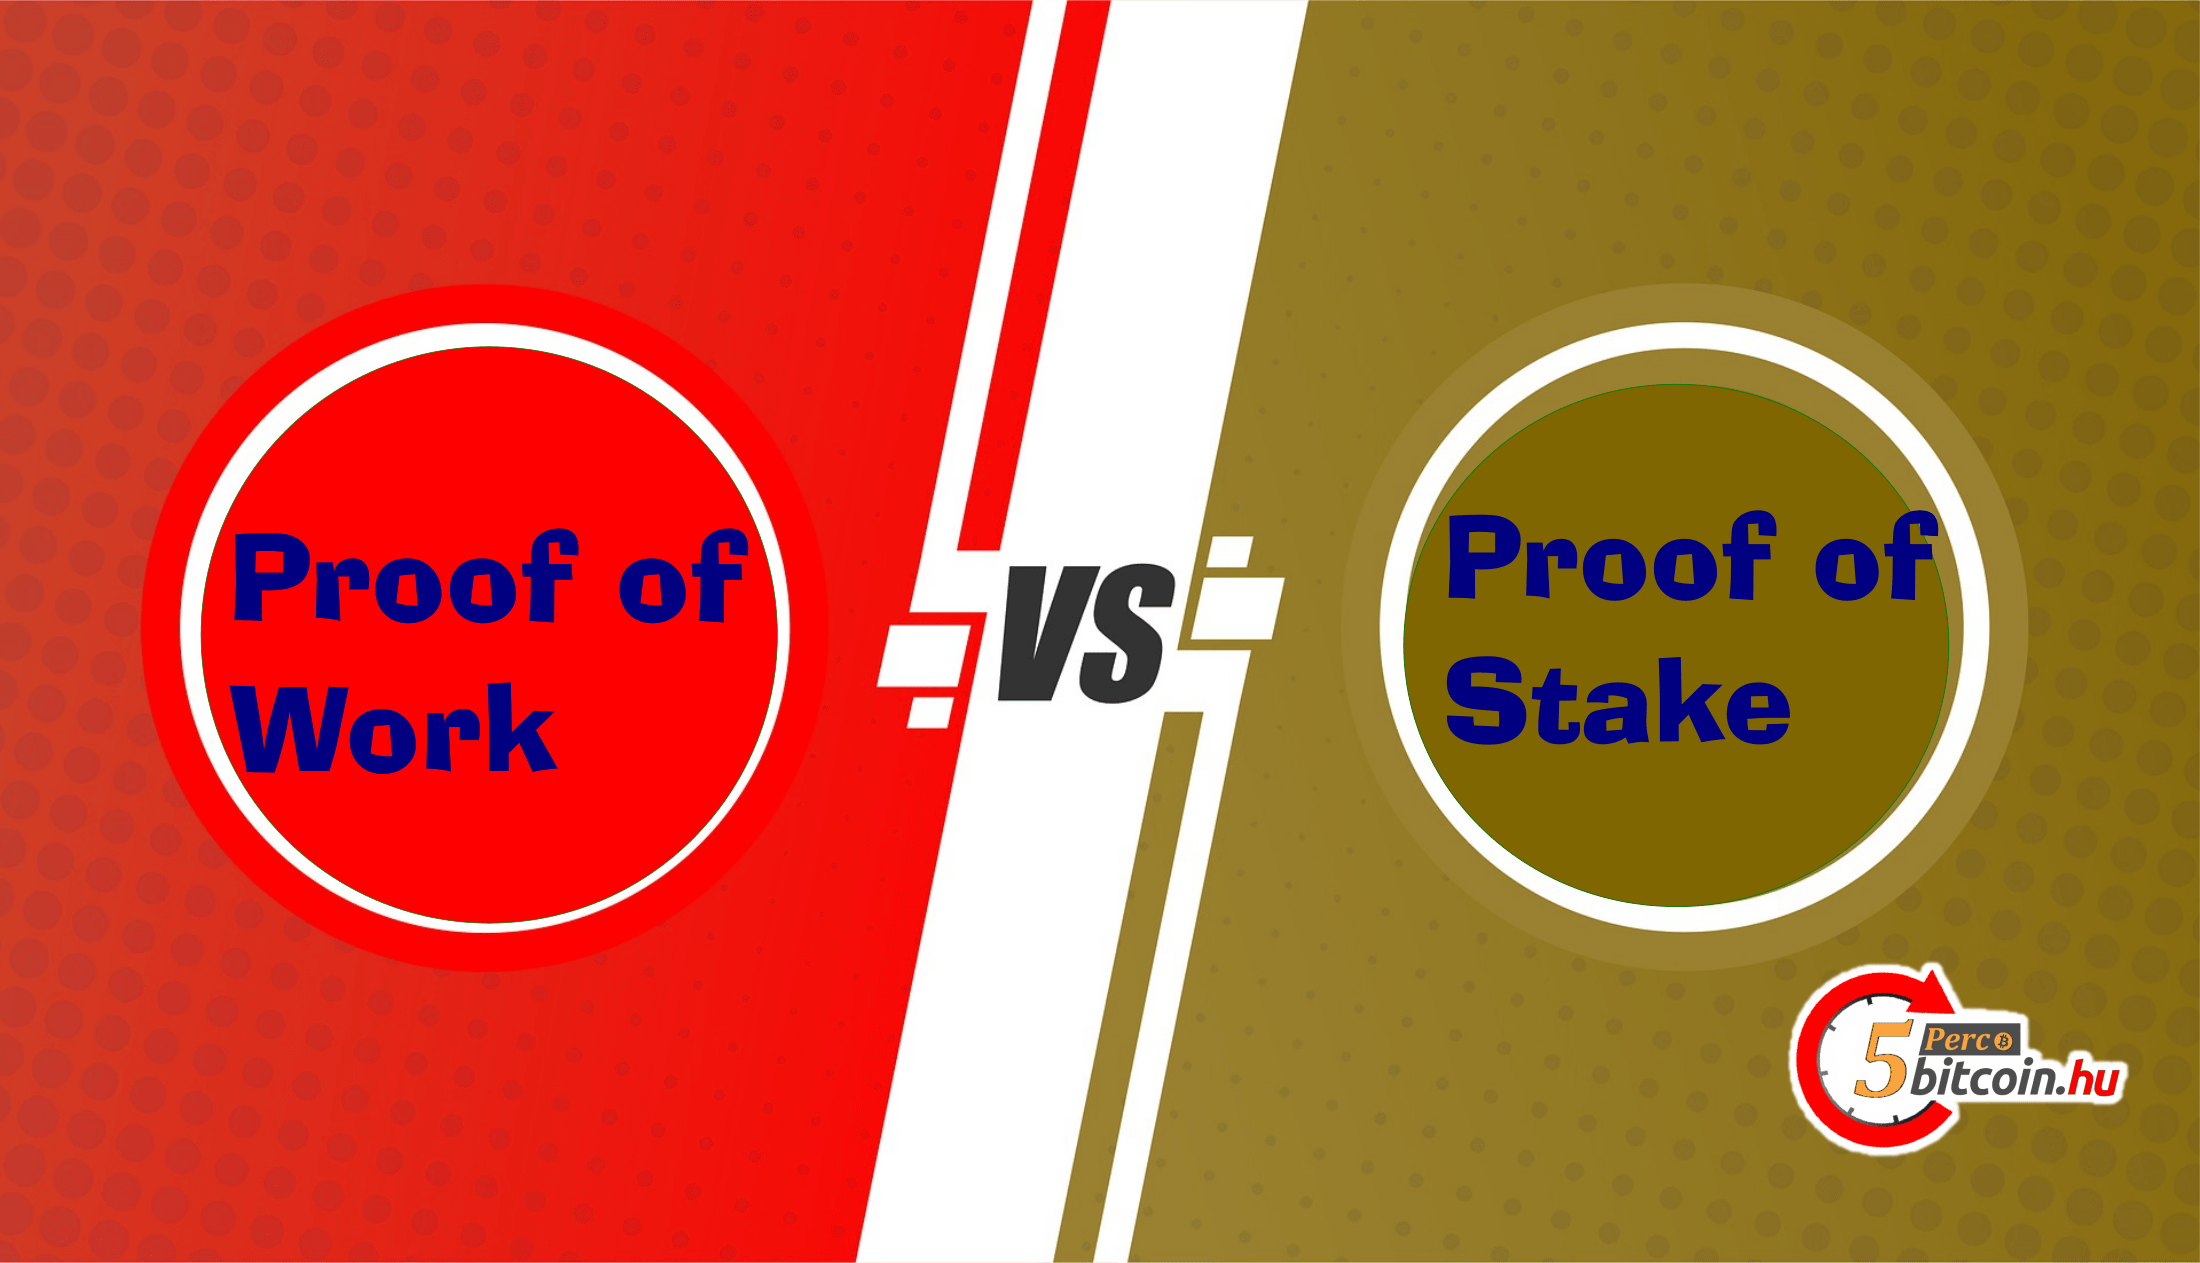 PoW vs PoS A Proof-of-Work objektív, a Proof-of-Stake nem 5percbitcoin